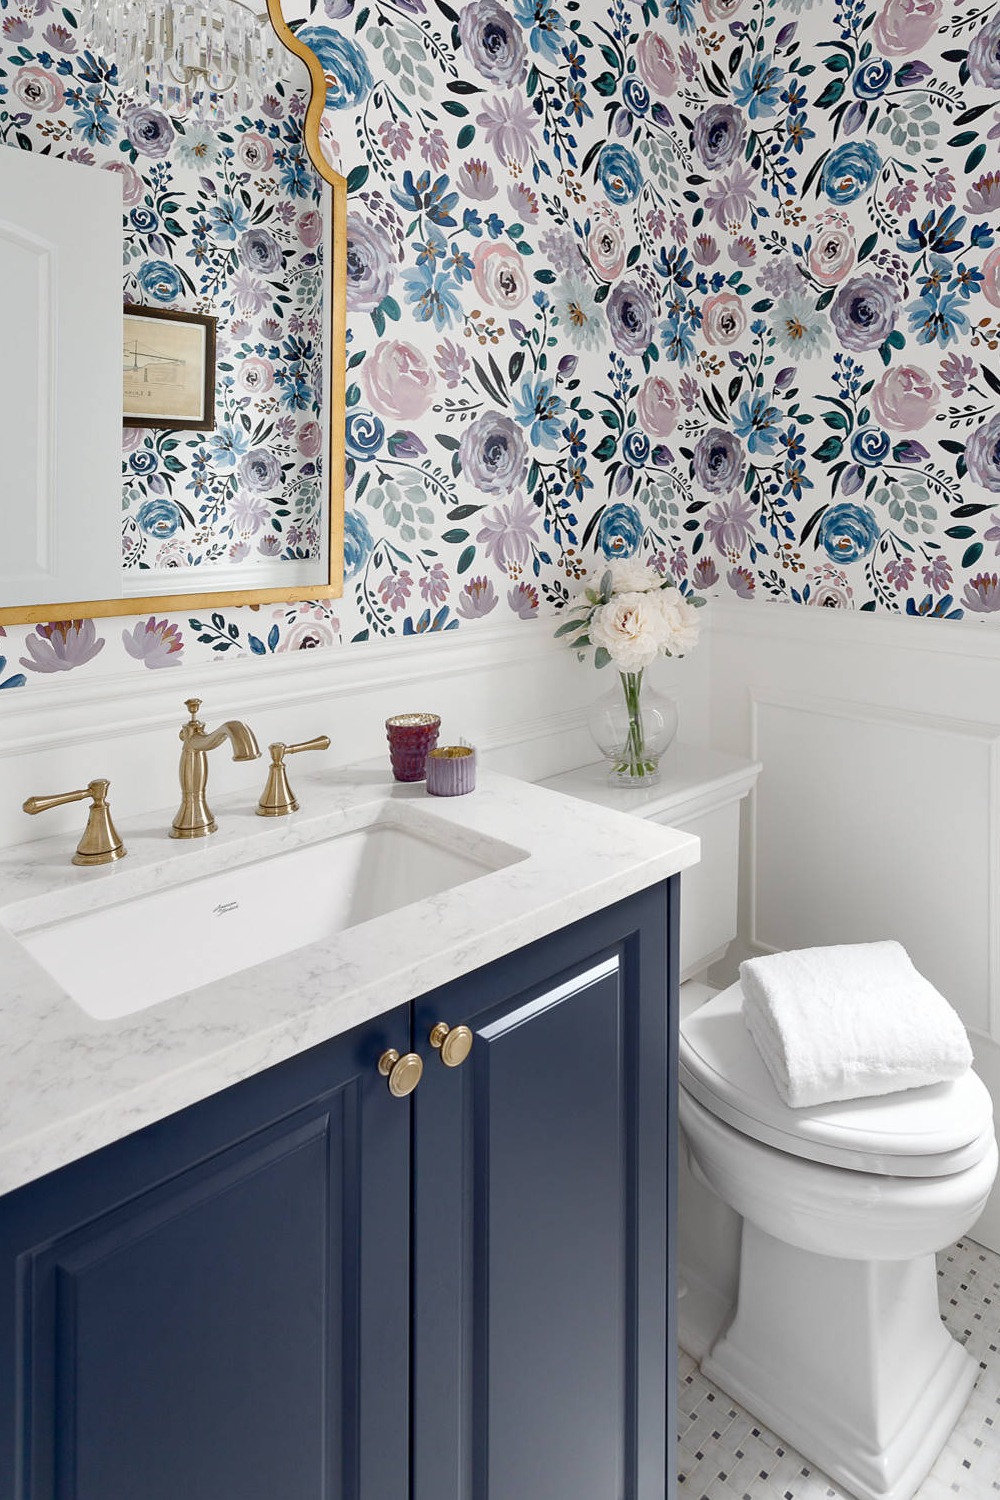 Powder Room Design Ideas Interior Design Room Bathroom Vanity Space Sink Style Walls Classic Renovation Toilet Details